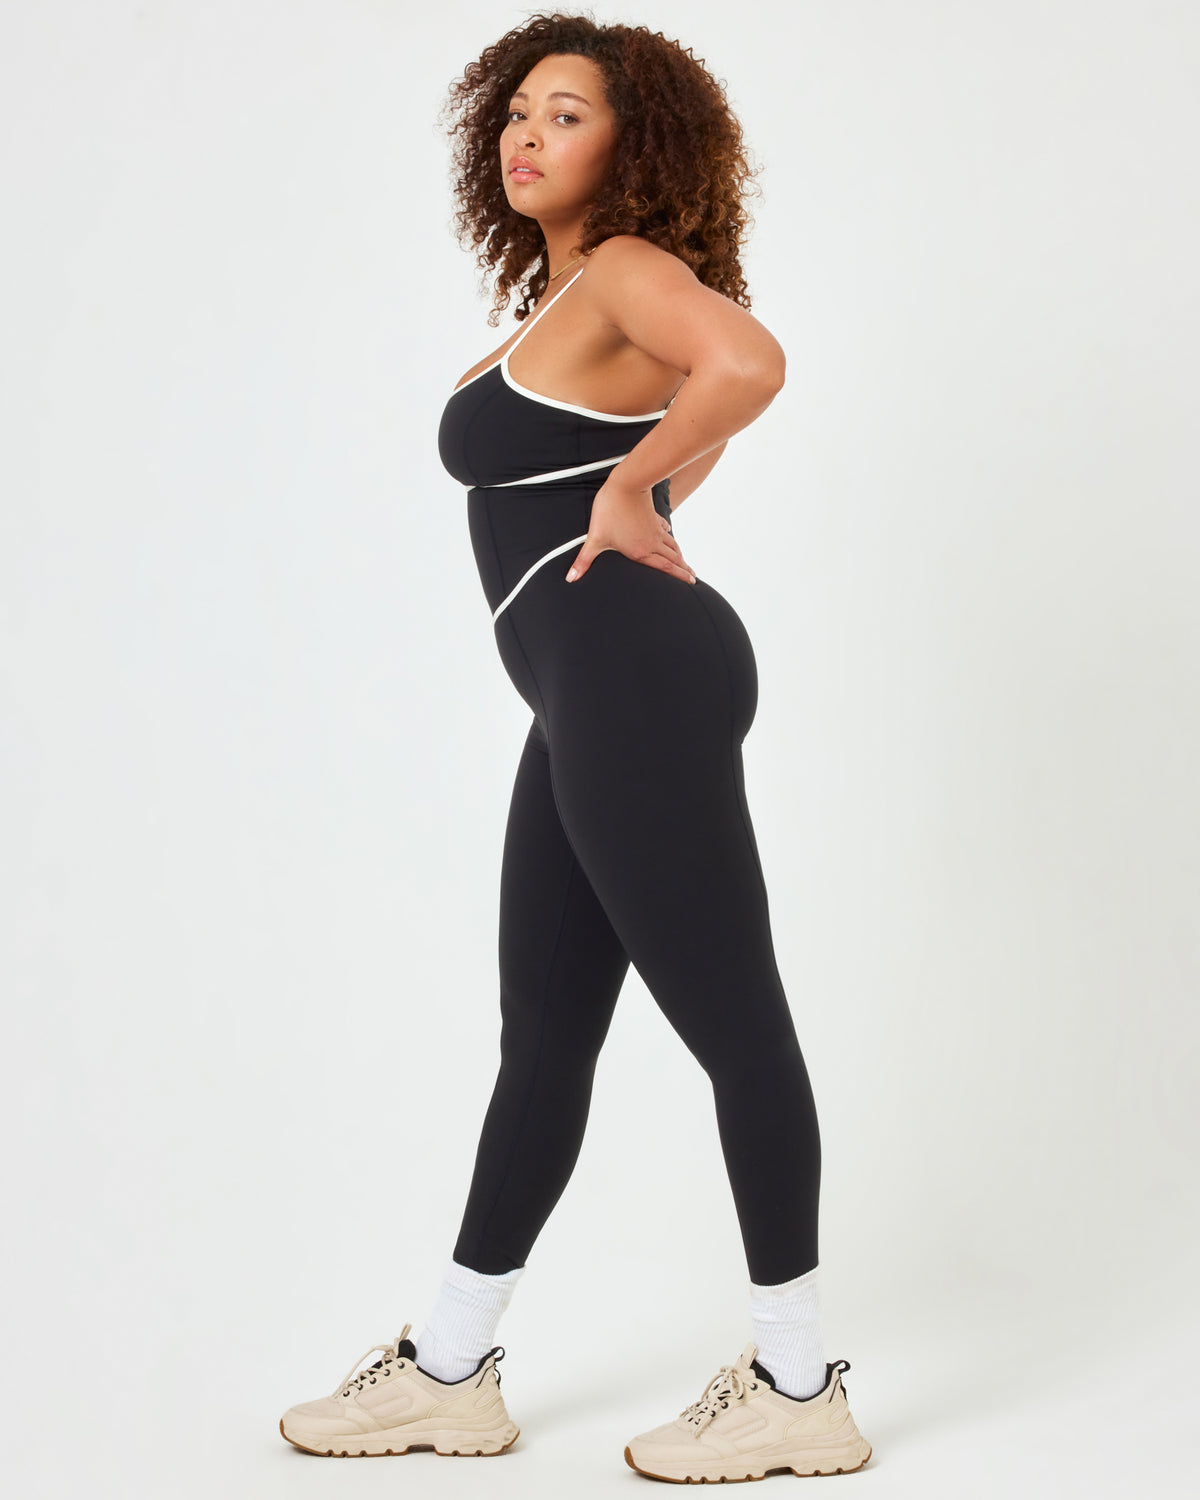 Ace Jumpsuit - Black-Cream Black-Cream | Model: Amber (size: XL)